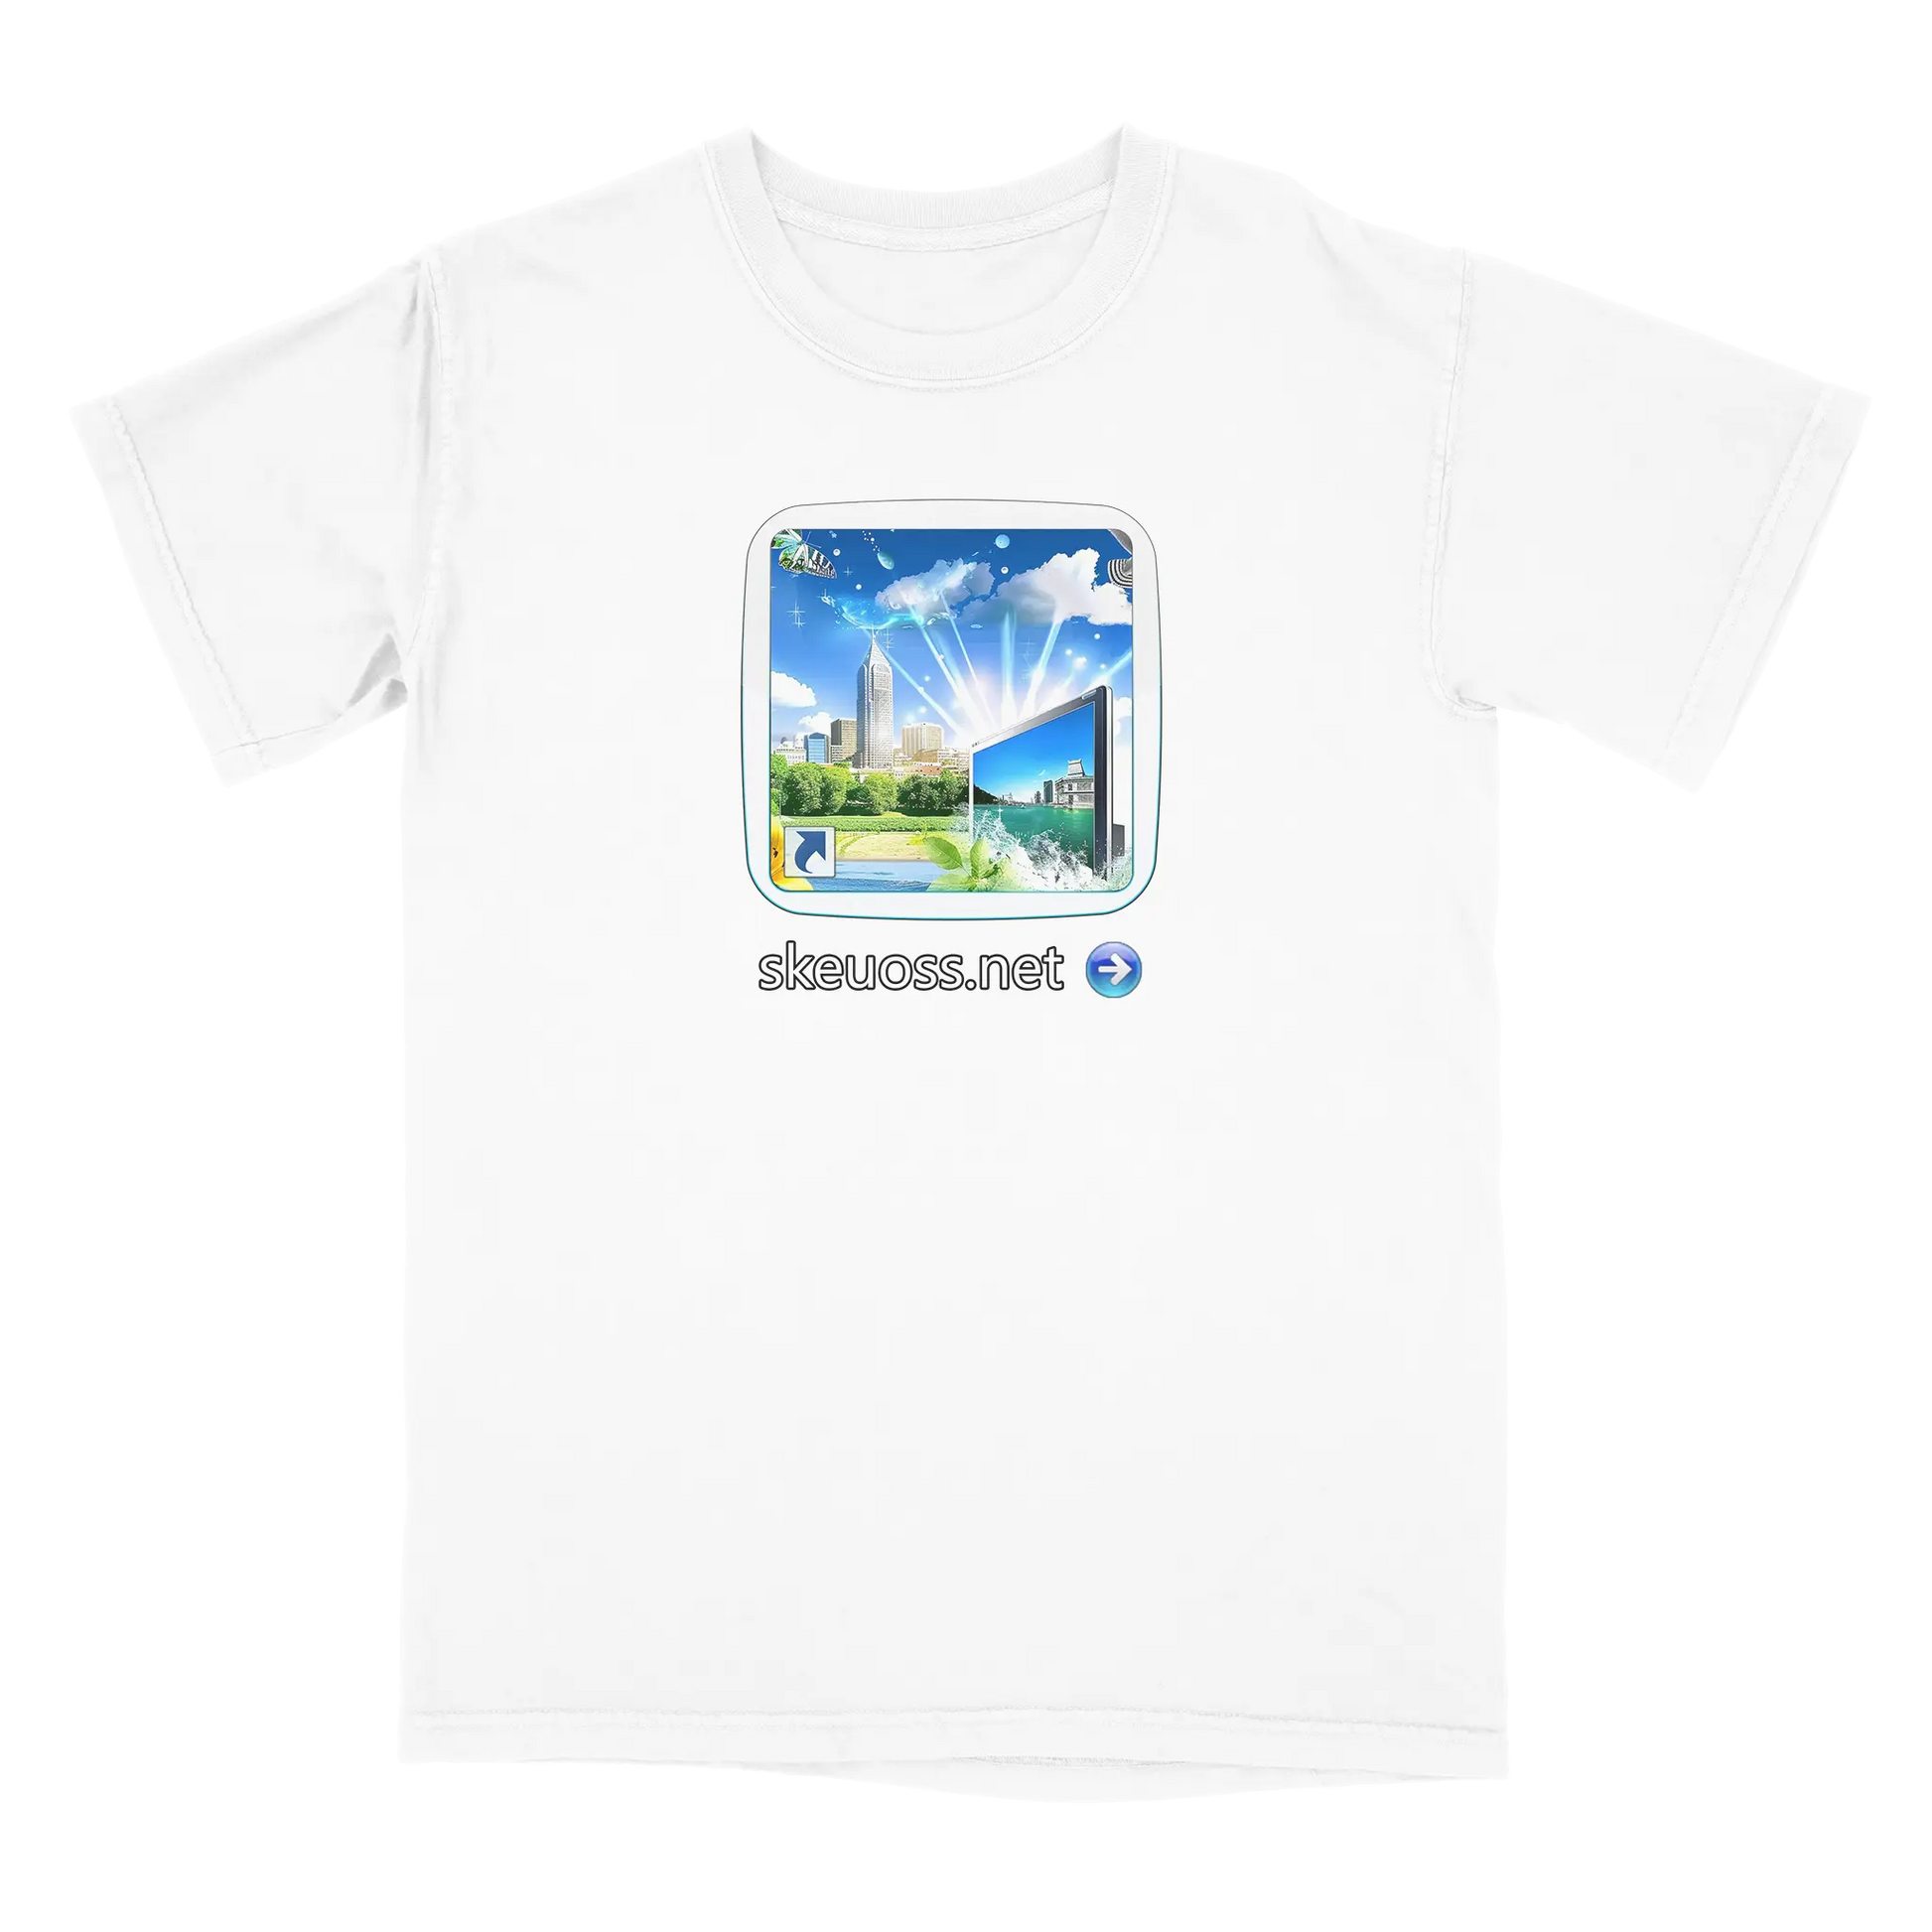 Frutiger Aero T-shirt - User Login Collection - User 321